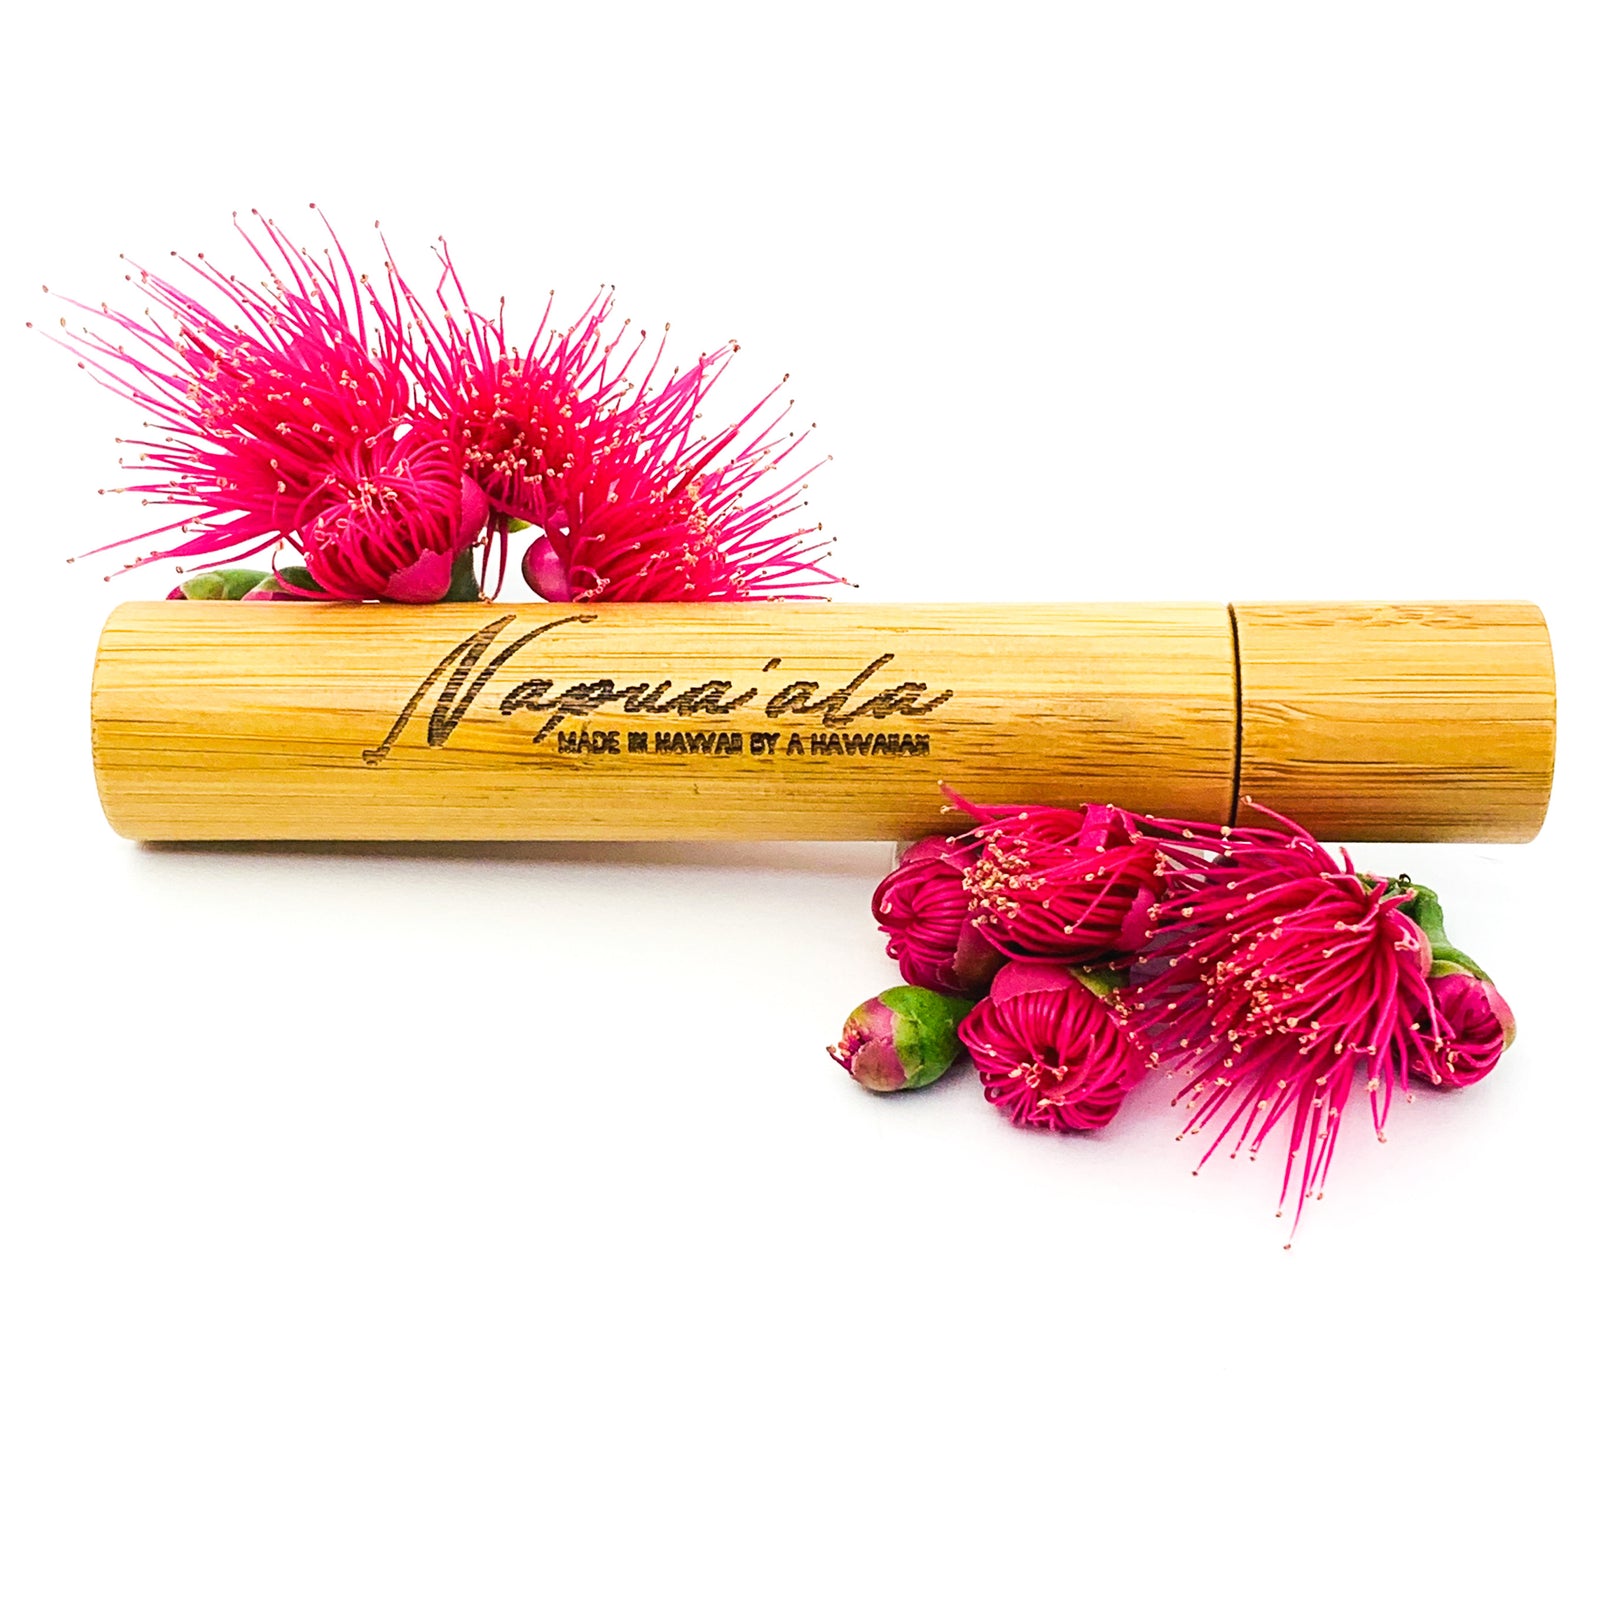 Pop-Up Mākeke - Napua'ala - Lokelani Maui Rose Bamboo Perfume Roll-On